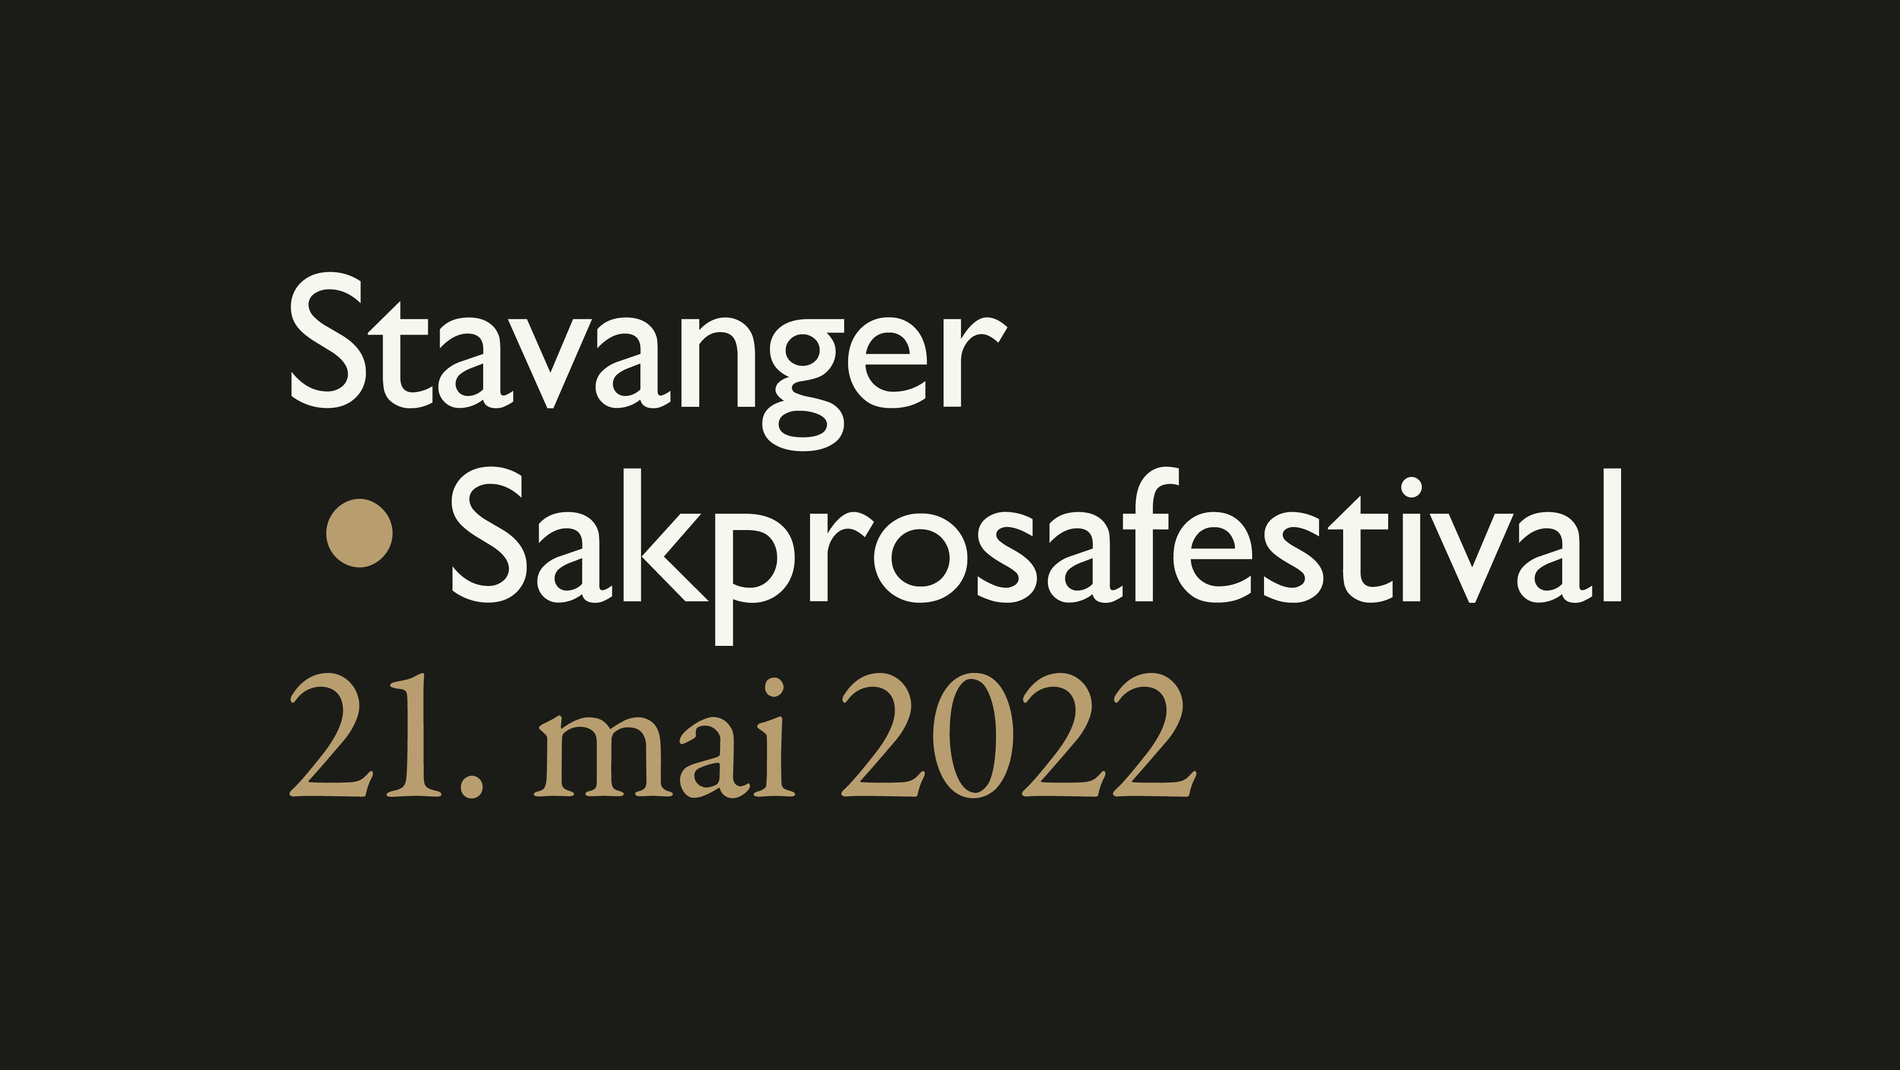 Stavanger sakprosafestival 2022